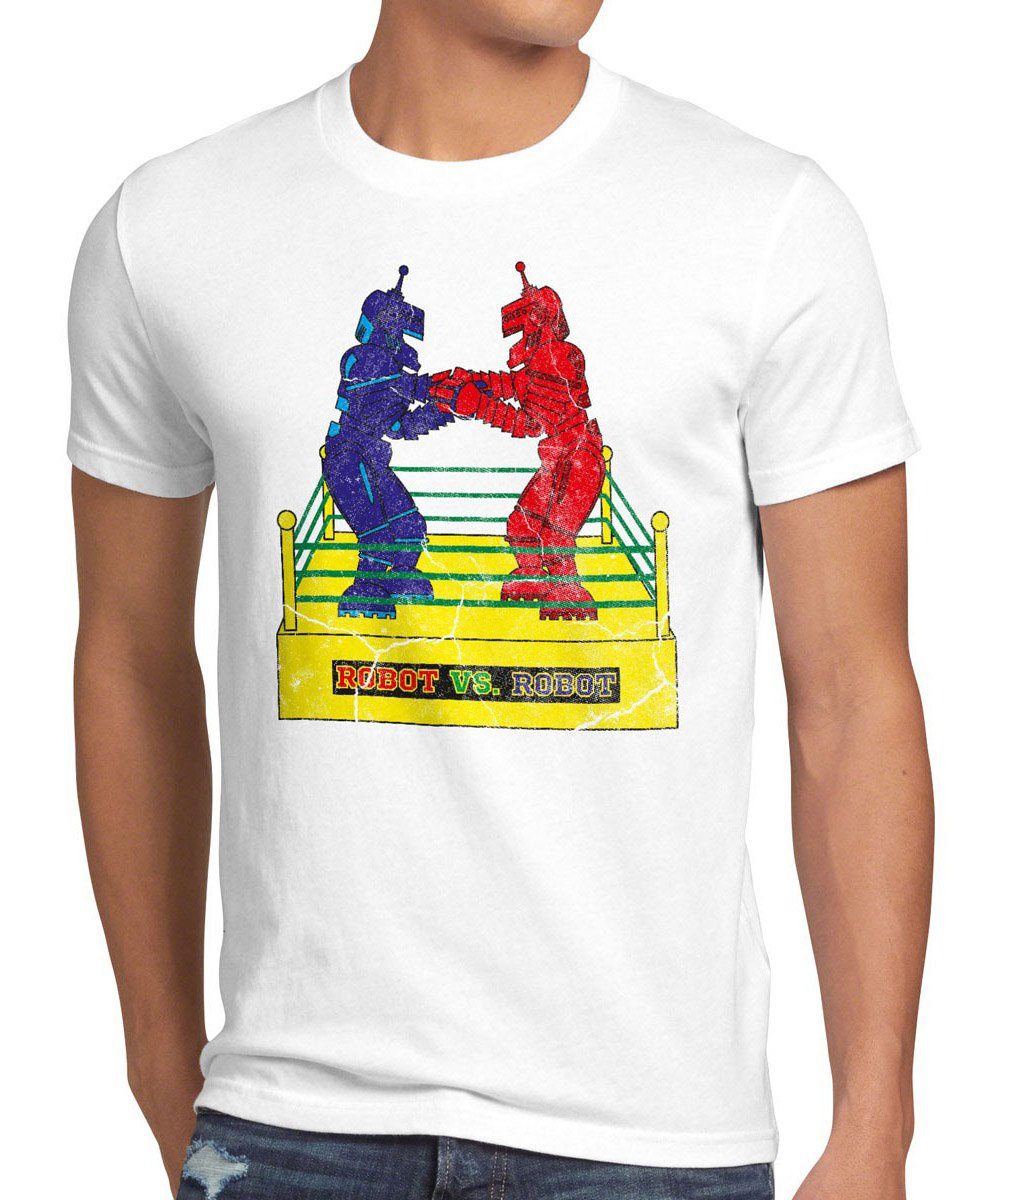 spiel weiß Roboter Print-Shirt big bang Theory em T-Shirt Herren rock boxen Cooper sheldon style3 Robot